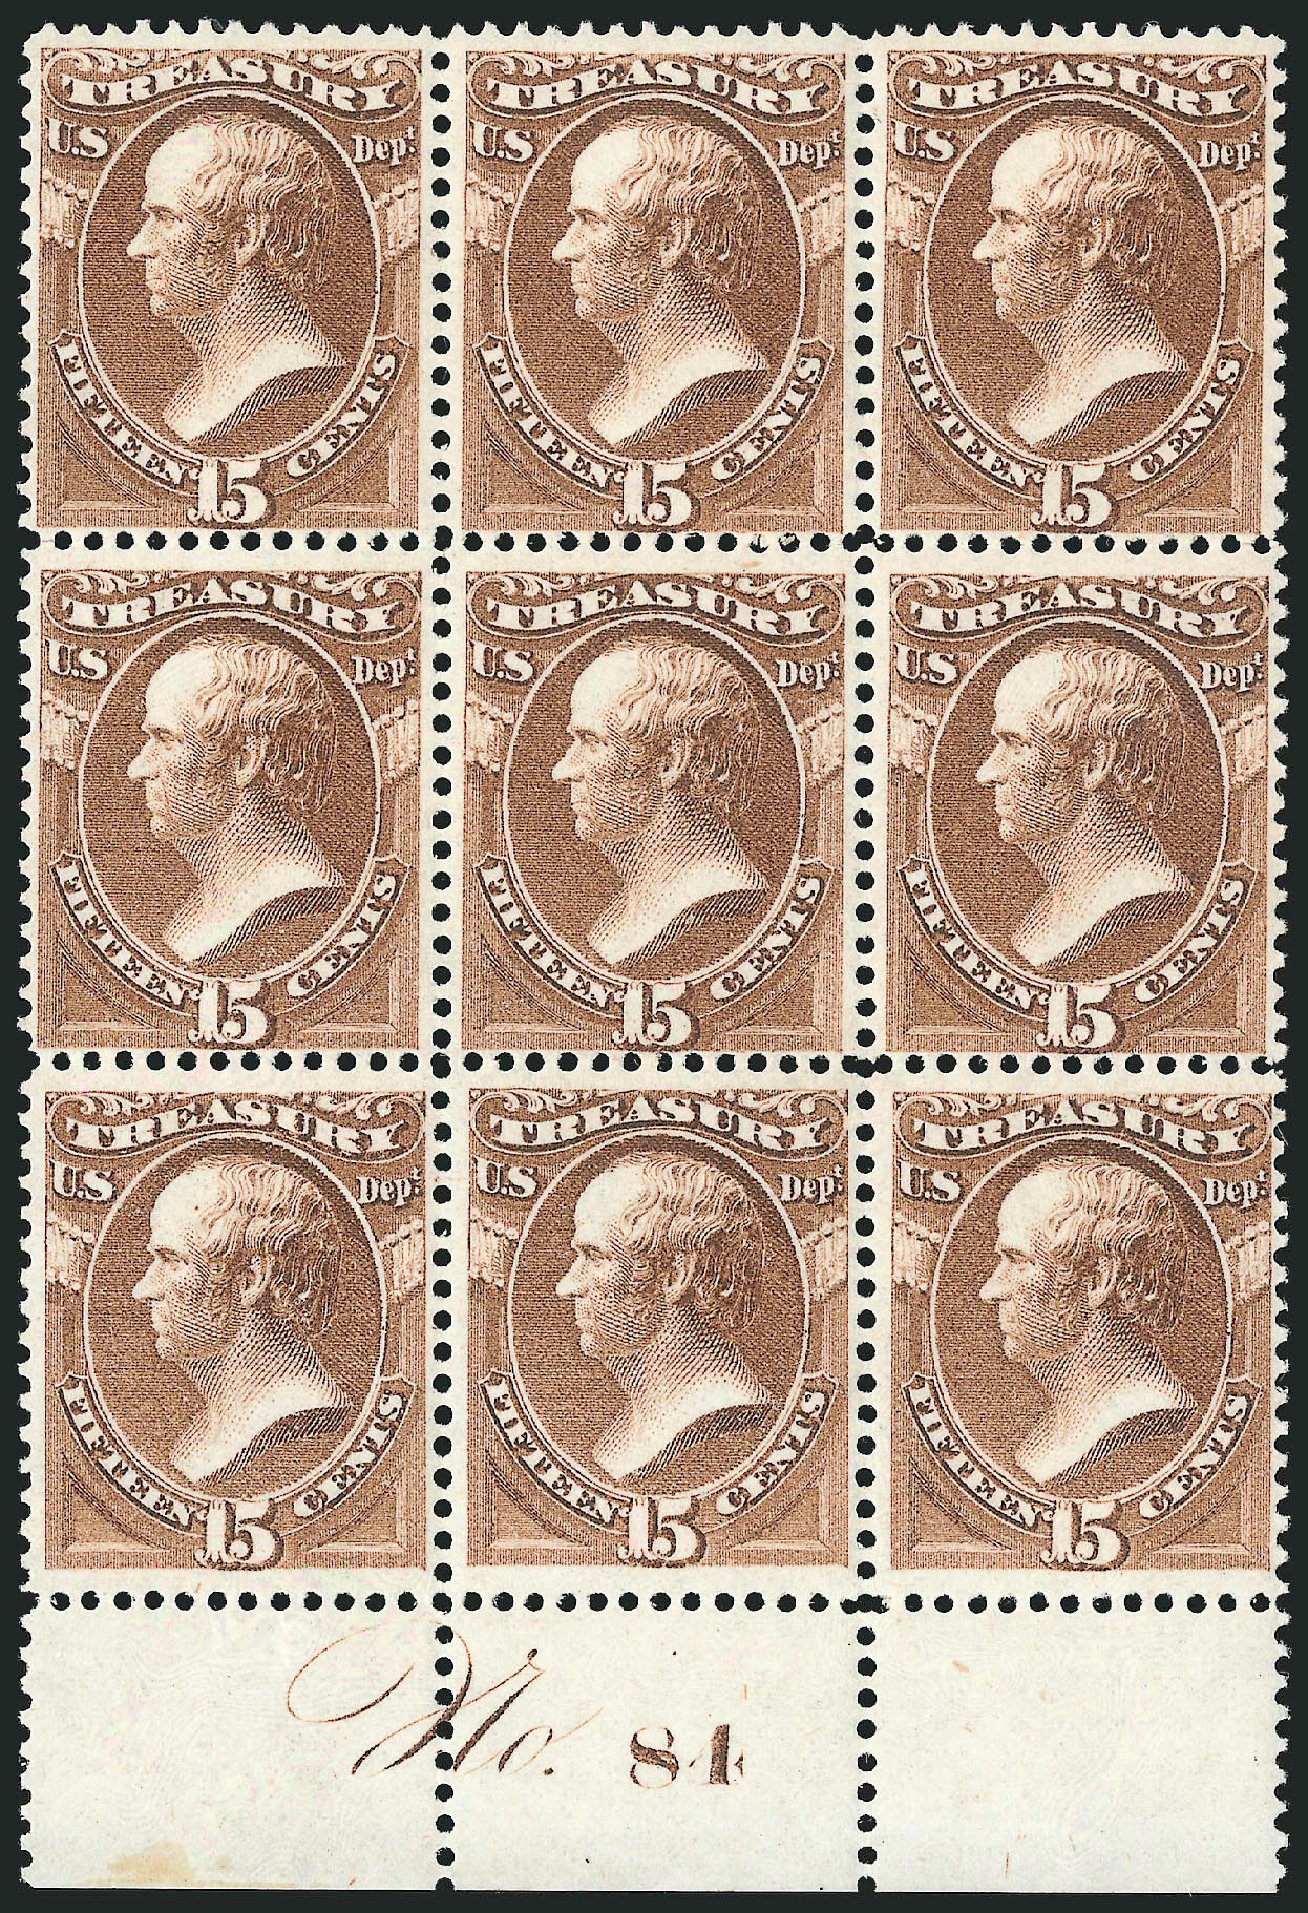 US Stamp Price Scott Cat. O79: 15c 1873 Treasury Official. Robert Siegel Auction Galleries, Nov 2014, Sale 1085, Lot 4127